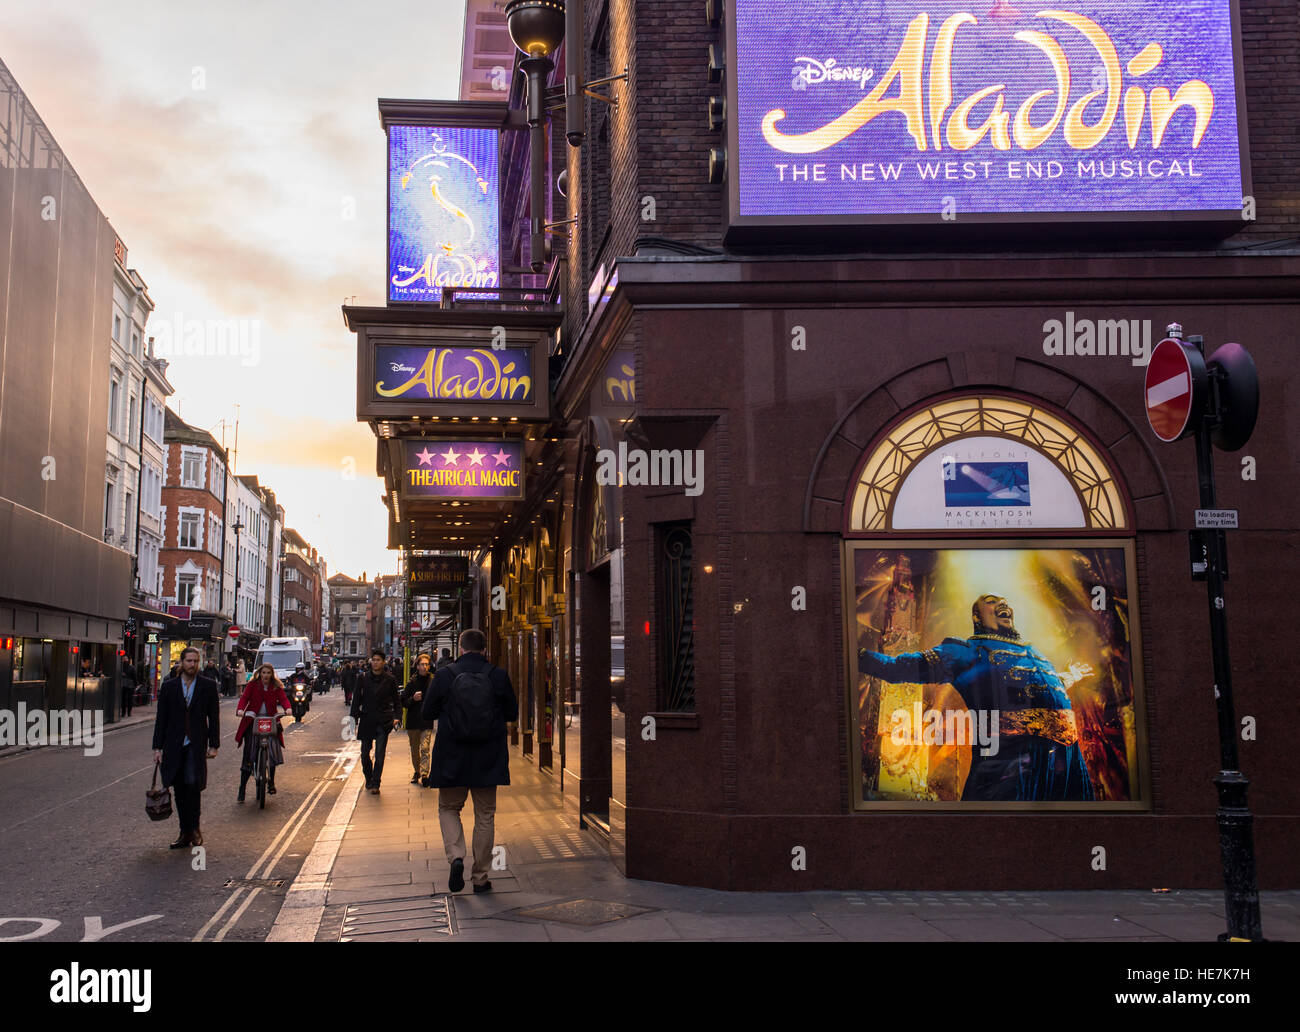 Street View de Prince Edward Theatre dans Old Compton Street, Soho, london uk. joue maintenant aladdin, Disney's new musical. Banque D'Images